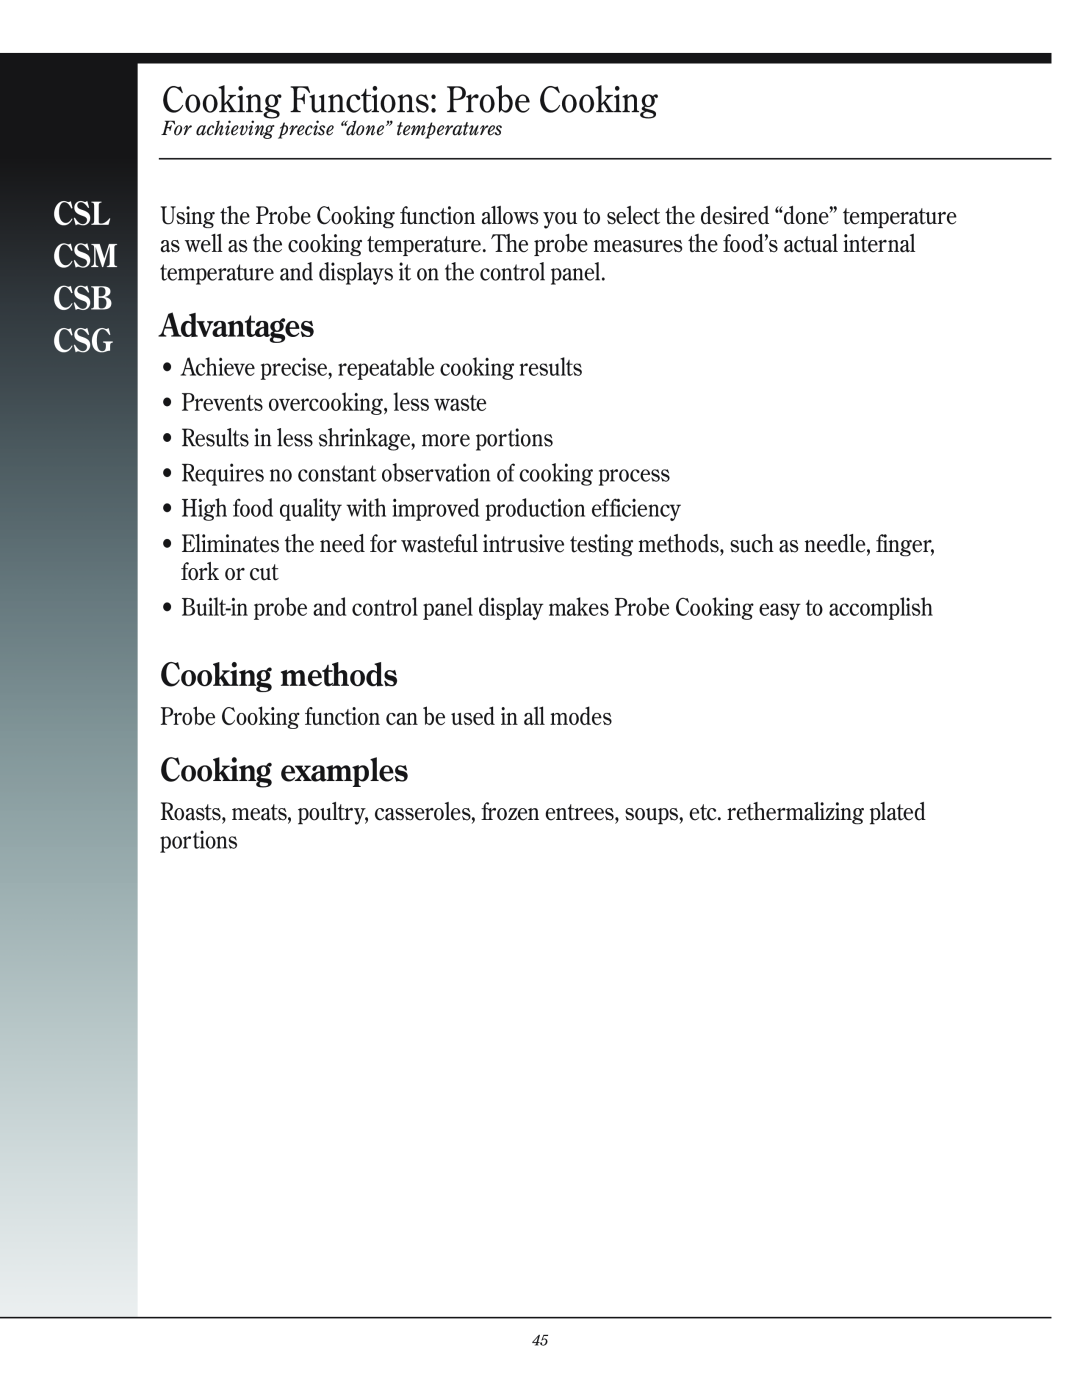 Henny Penny CSG manual Cooking Functions Probe Cooking, Advantages, Cooking methods, Cooking examples, Csl Csm Csb Csg 